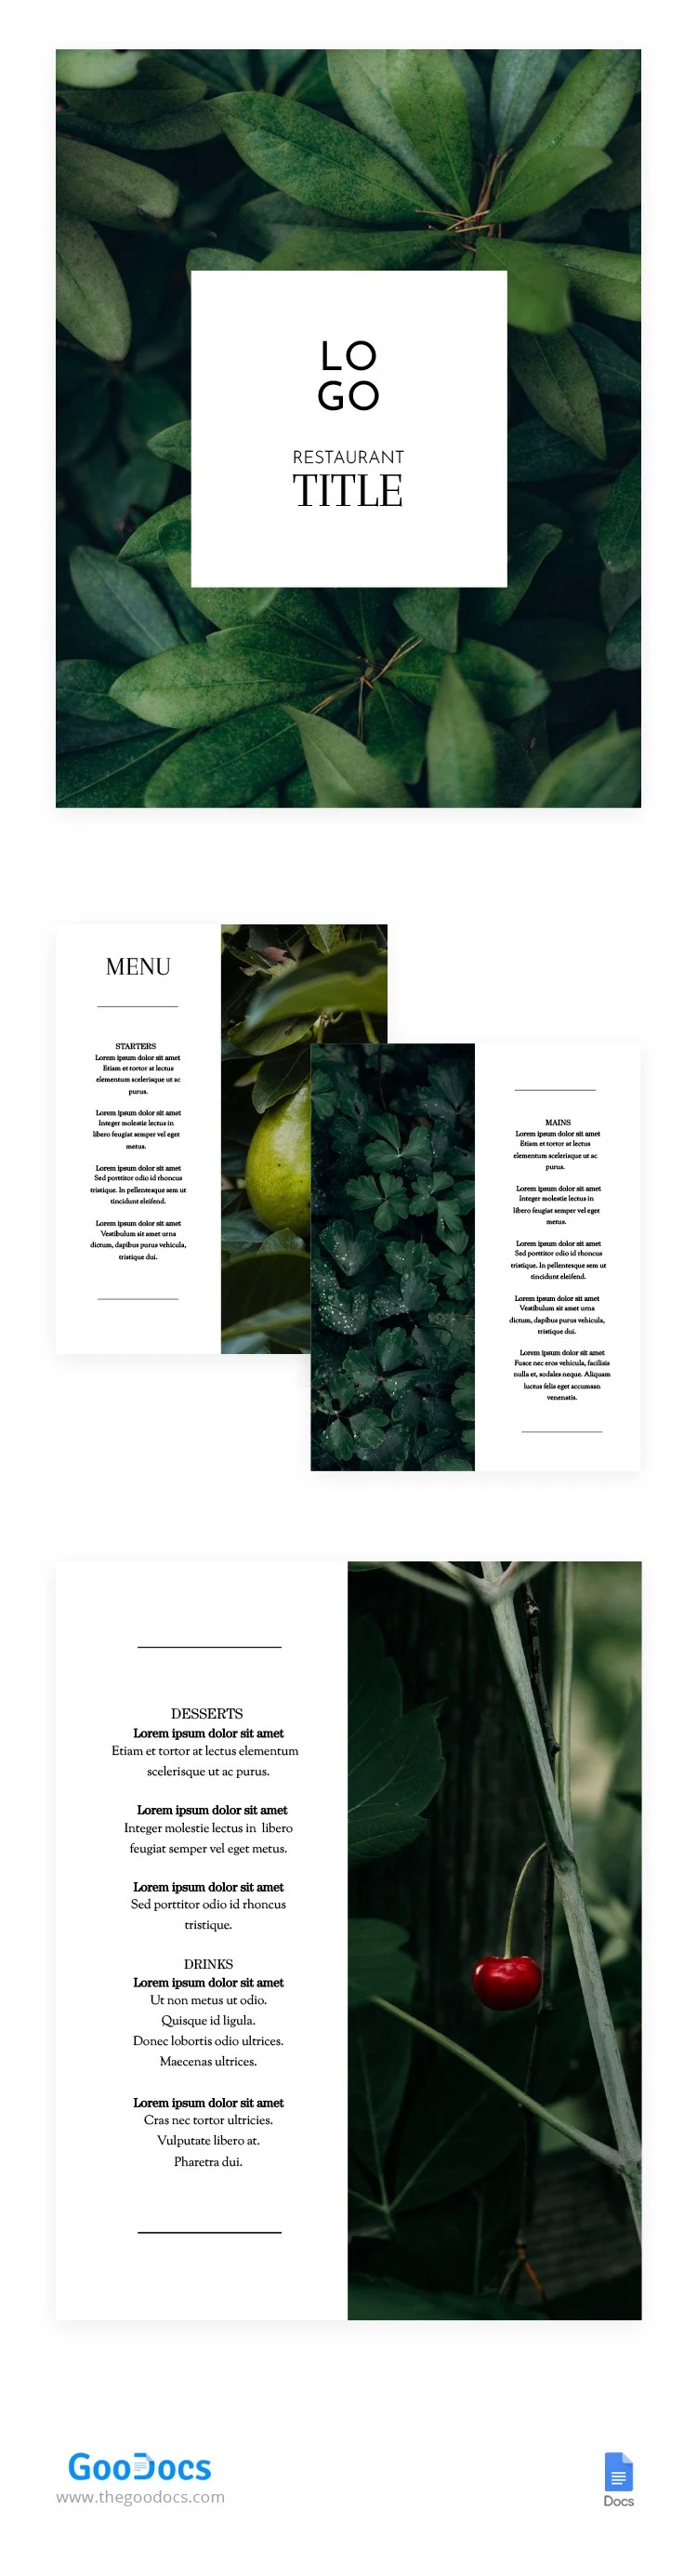 很棒的餐厅菜单 - free Google Docs Template - 10062460